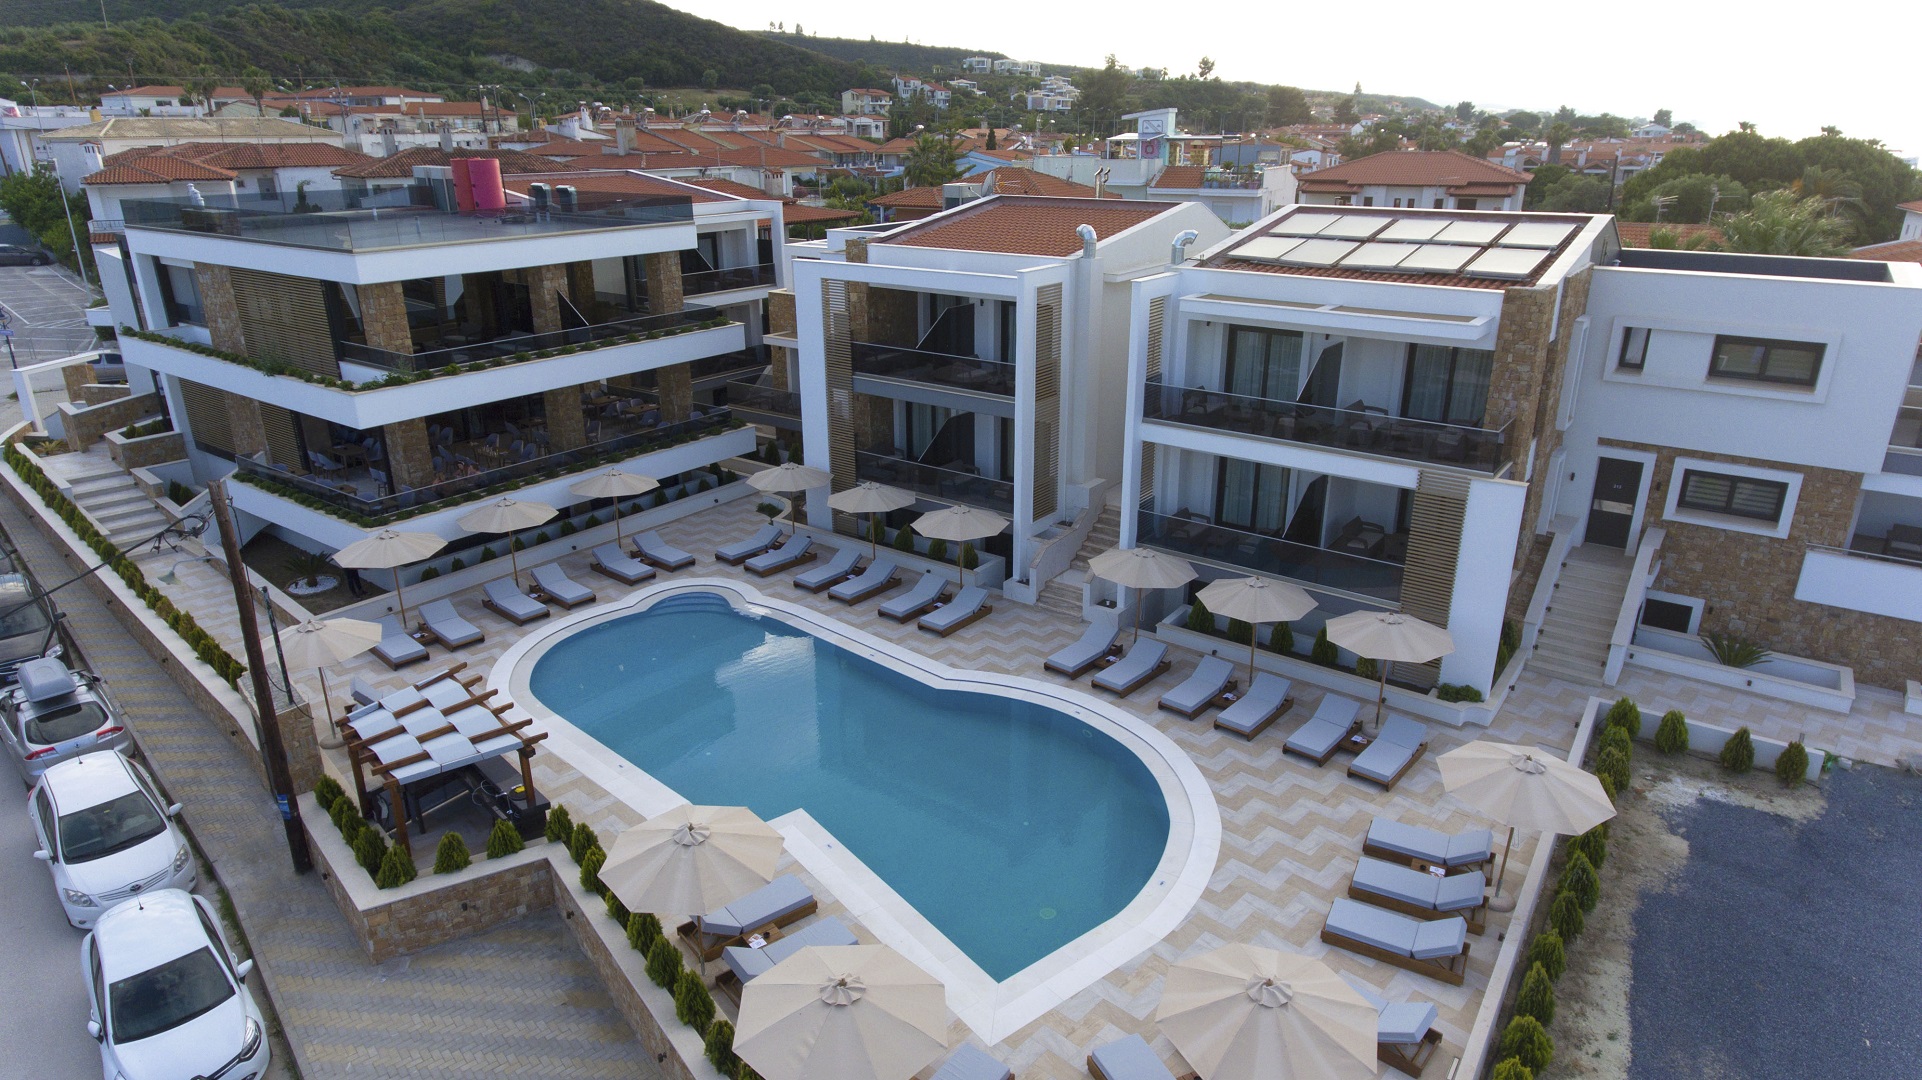 Agnes Deluxe Hotel - Κασσάνδρα, Χαλκιδική ✦ 4 Ημέρες (3 Διανυκτερεύσεις) ✦ 2 άτομα ✦ Πρωινό ✦ 02/05/2022 έως 30/09/2022 ✦ Κοντά στην παραλία!